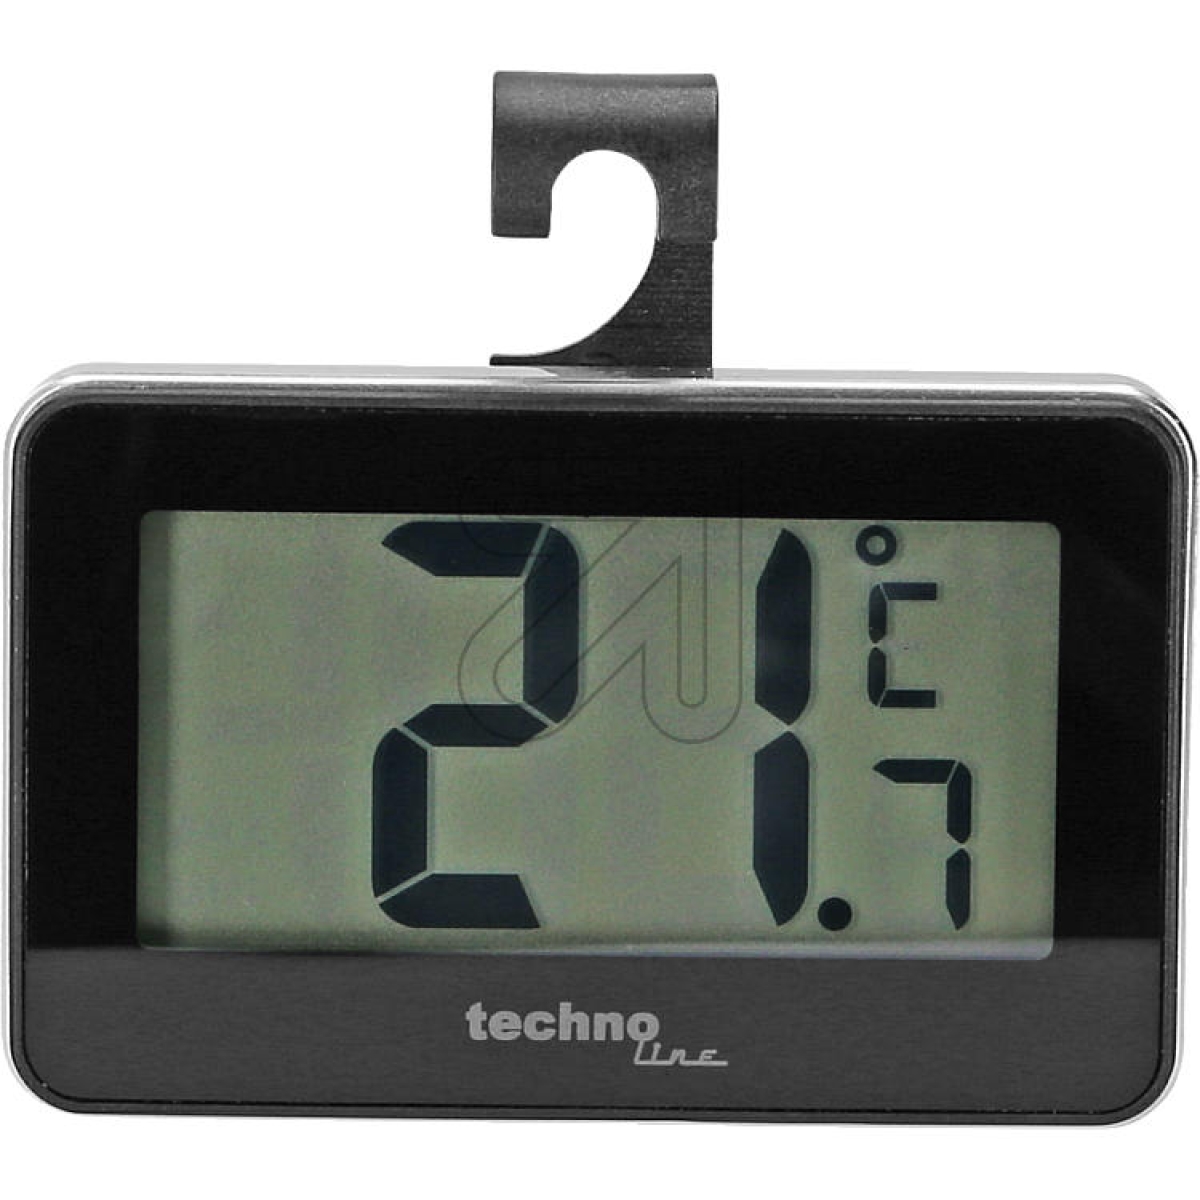 techno lineFridge/freezer thermometer WS 7012Article-No: 473130